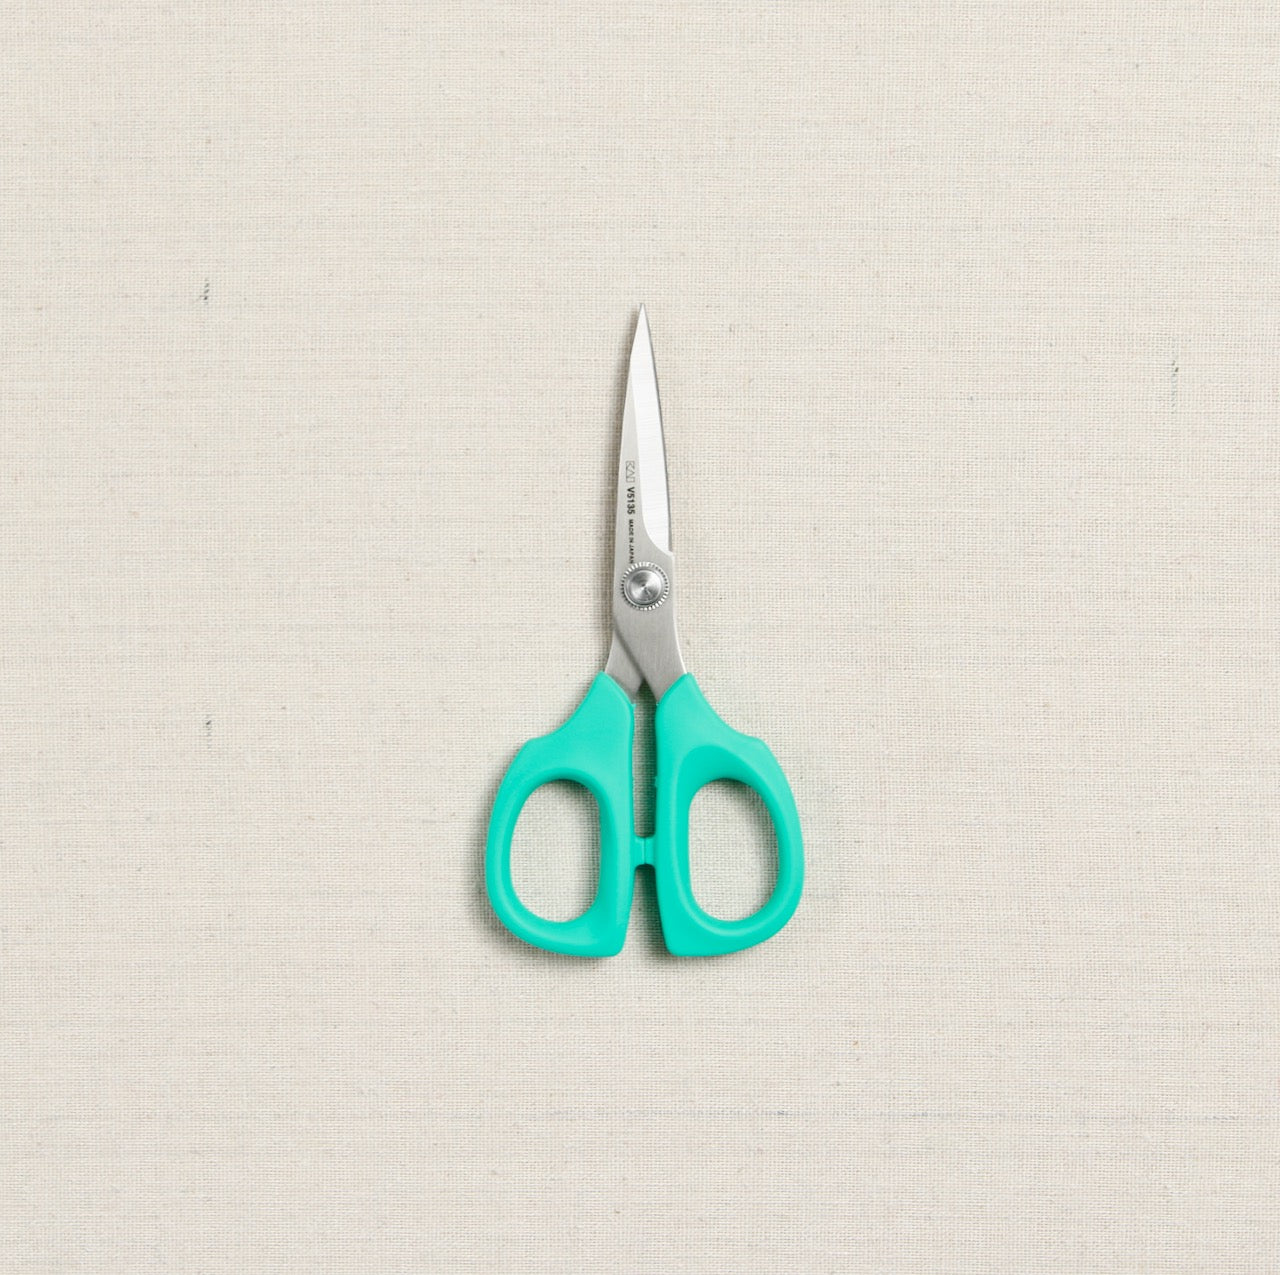 6.5” Teal Sewing Scissors | Kai #V5165